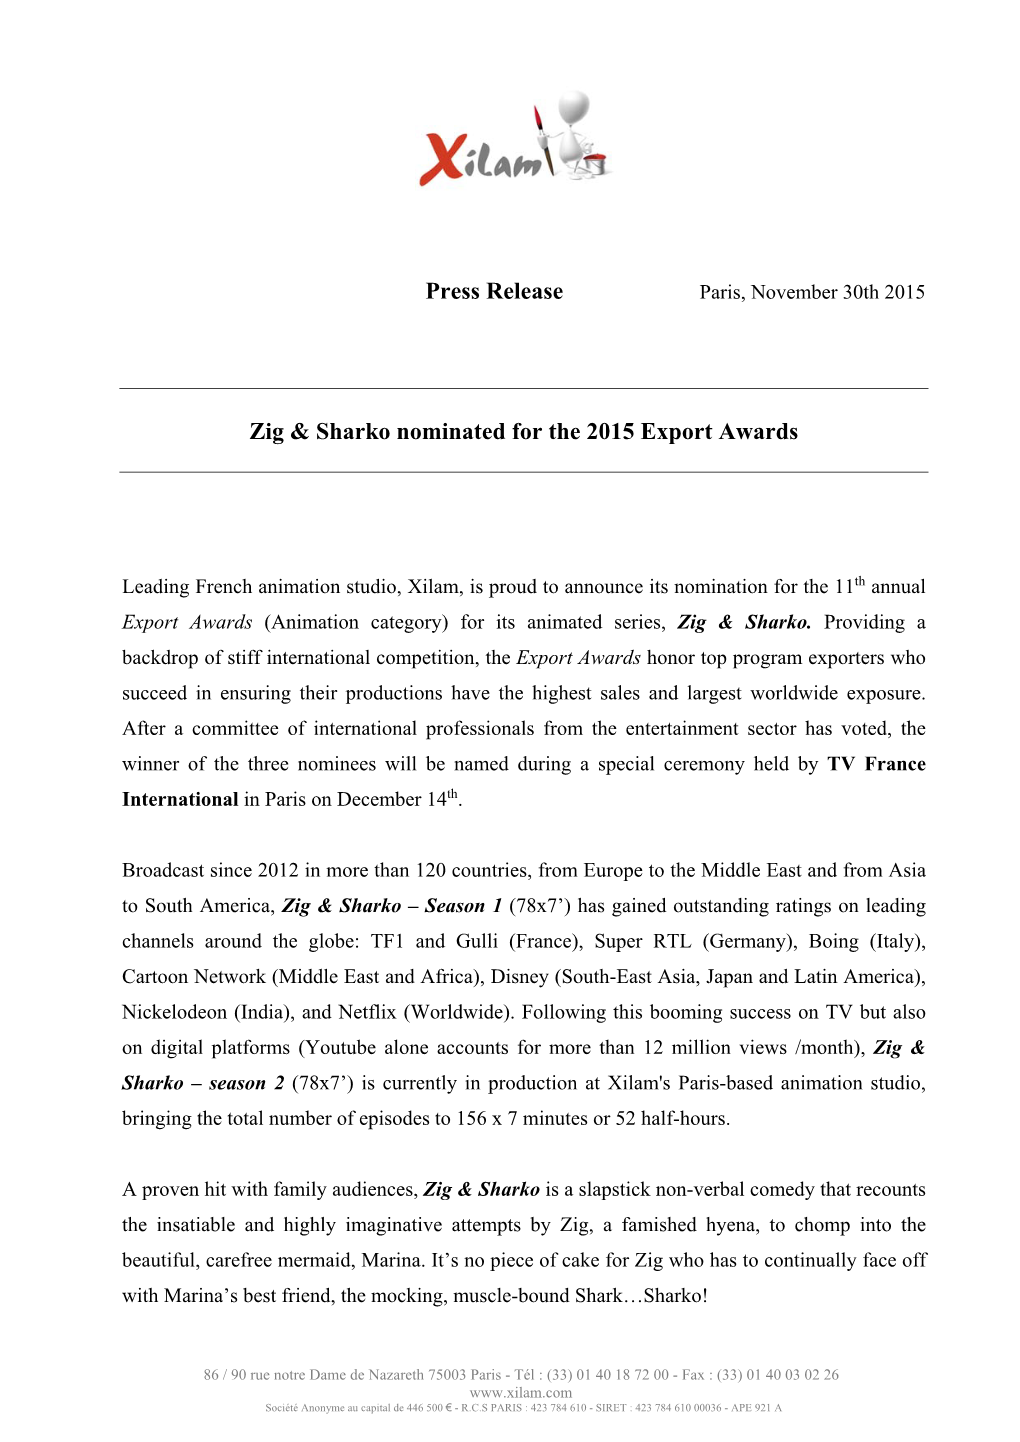 Press Release Zig & Sharko Nominated for the 2015 Export